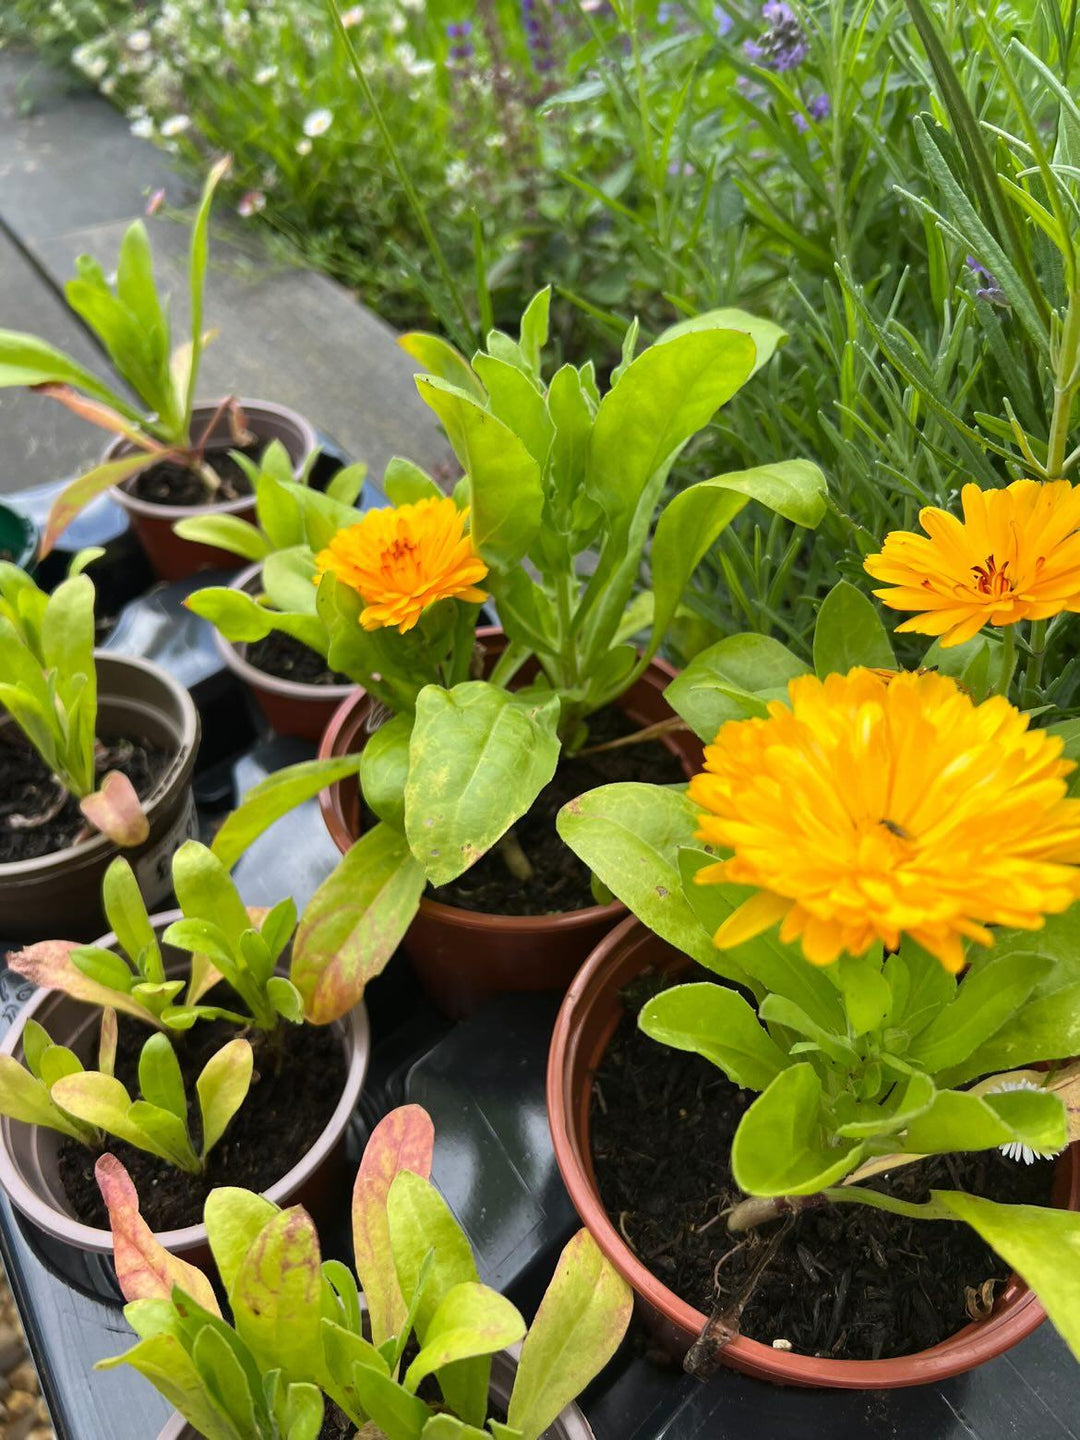 Marigolds grown from organic edible flower seeds